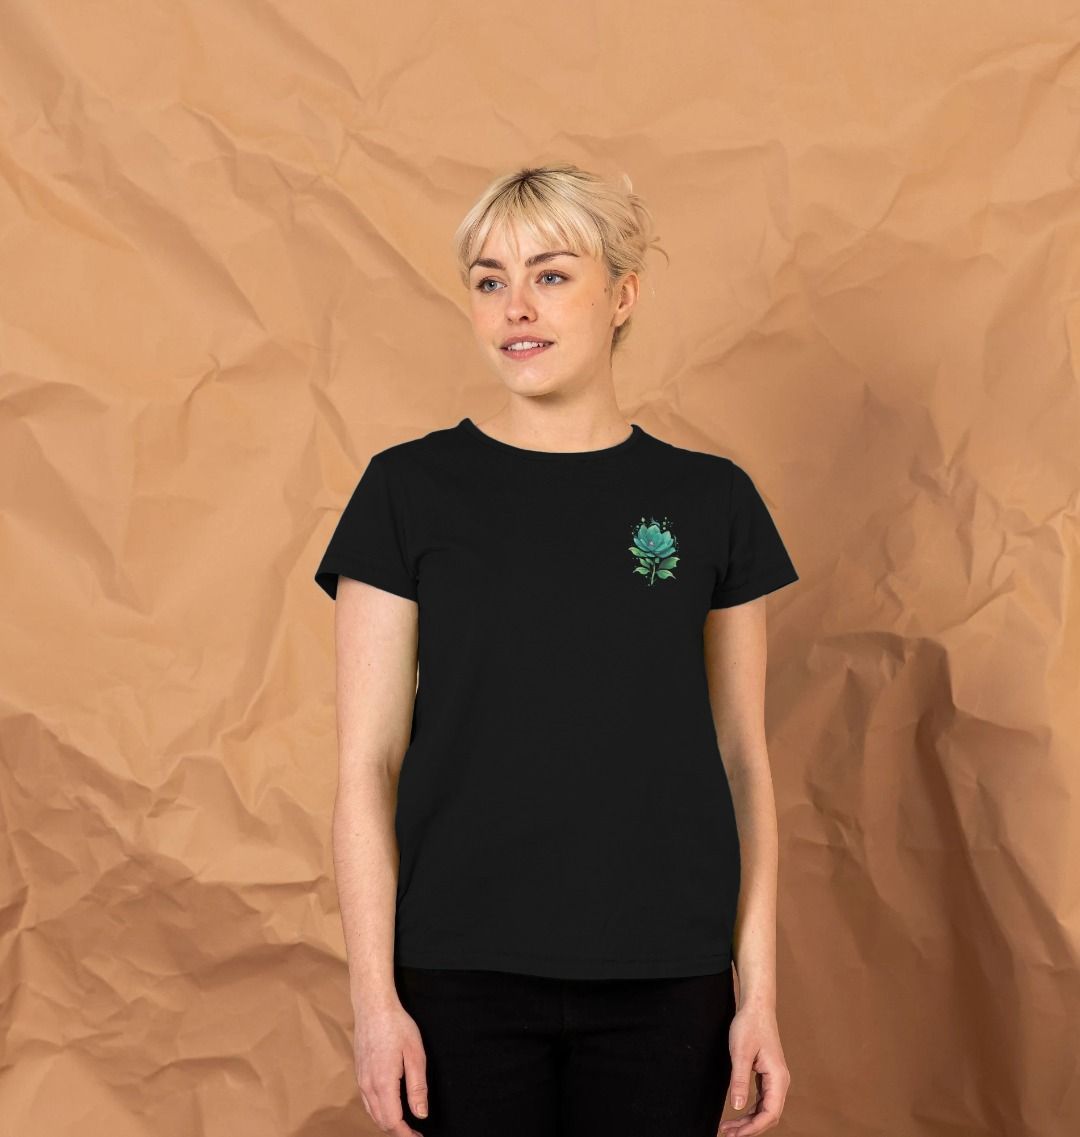 Women's green jade flower design crew neck organic cotton t-shirt - Premium Eco Chic Printed T-shirt from Eco Threadz - Just £20! Shop now at Eco Threadz